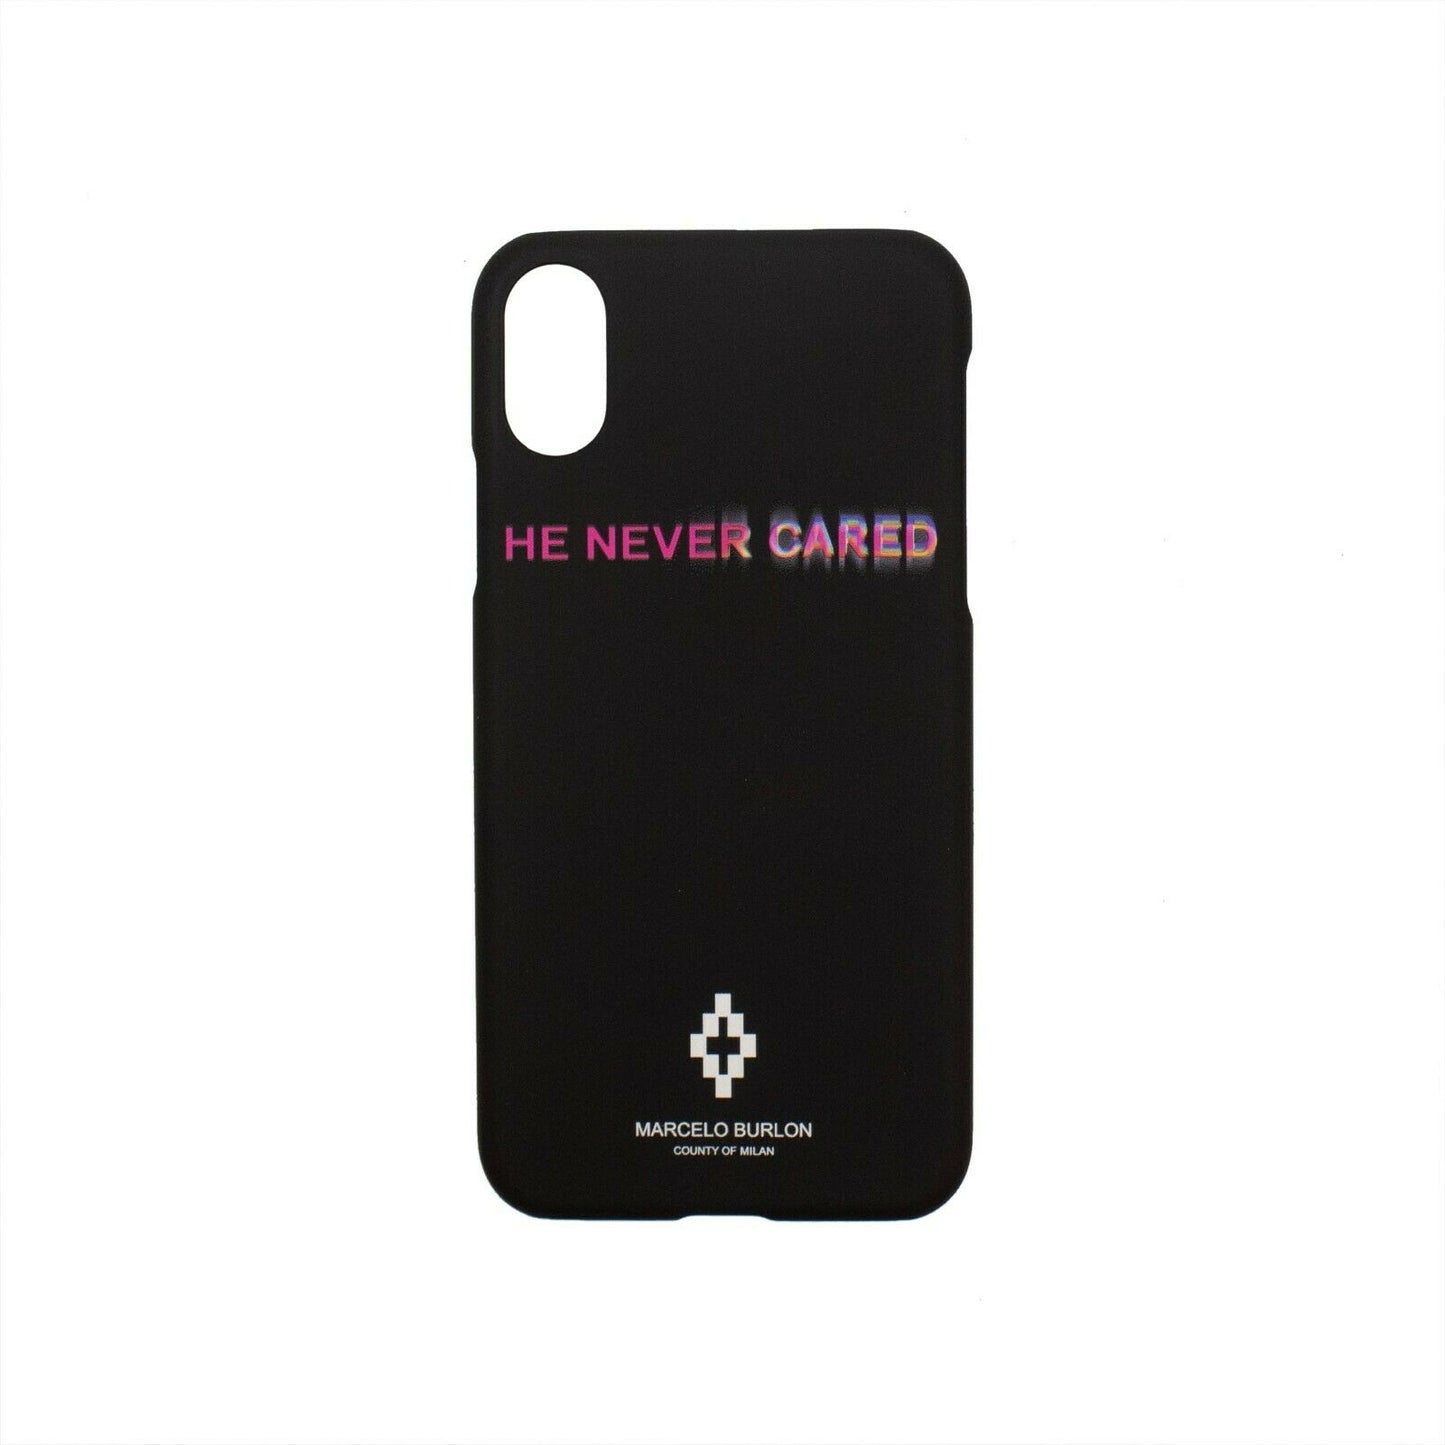 Marcelo Burlon 'He Never Cared' Iphone X Phone Case - Black